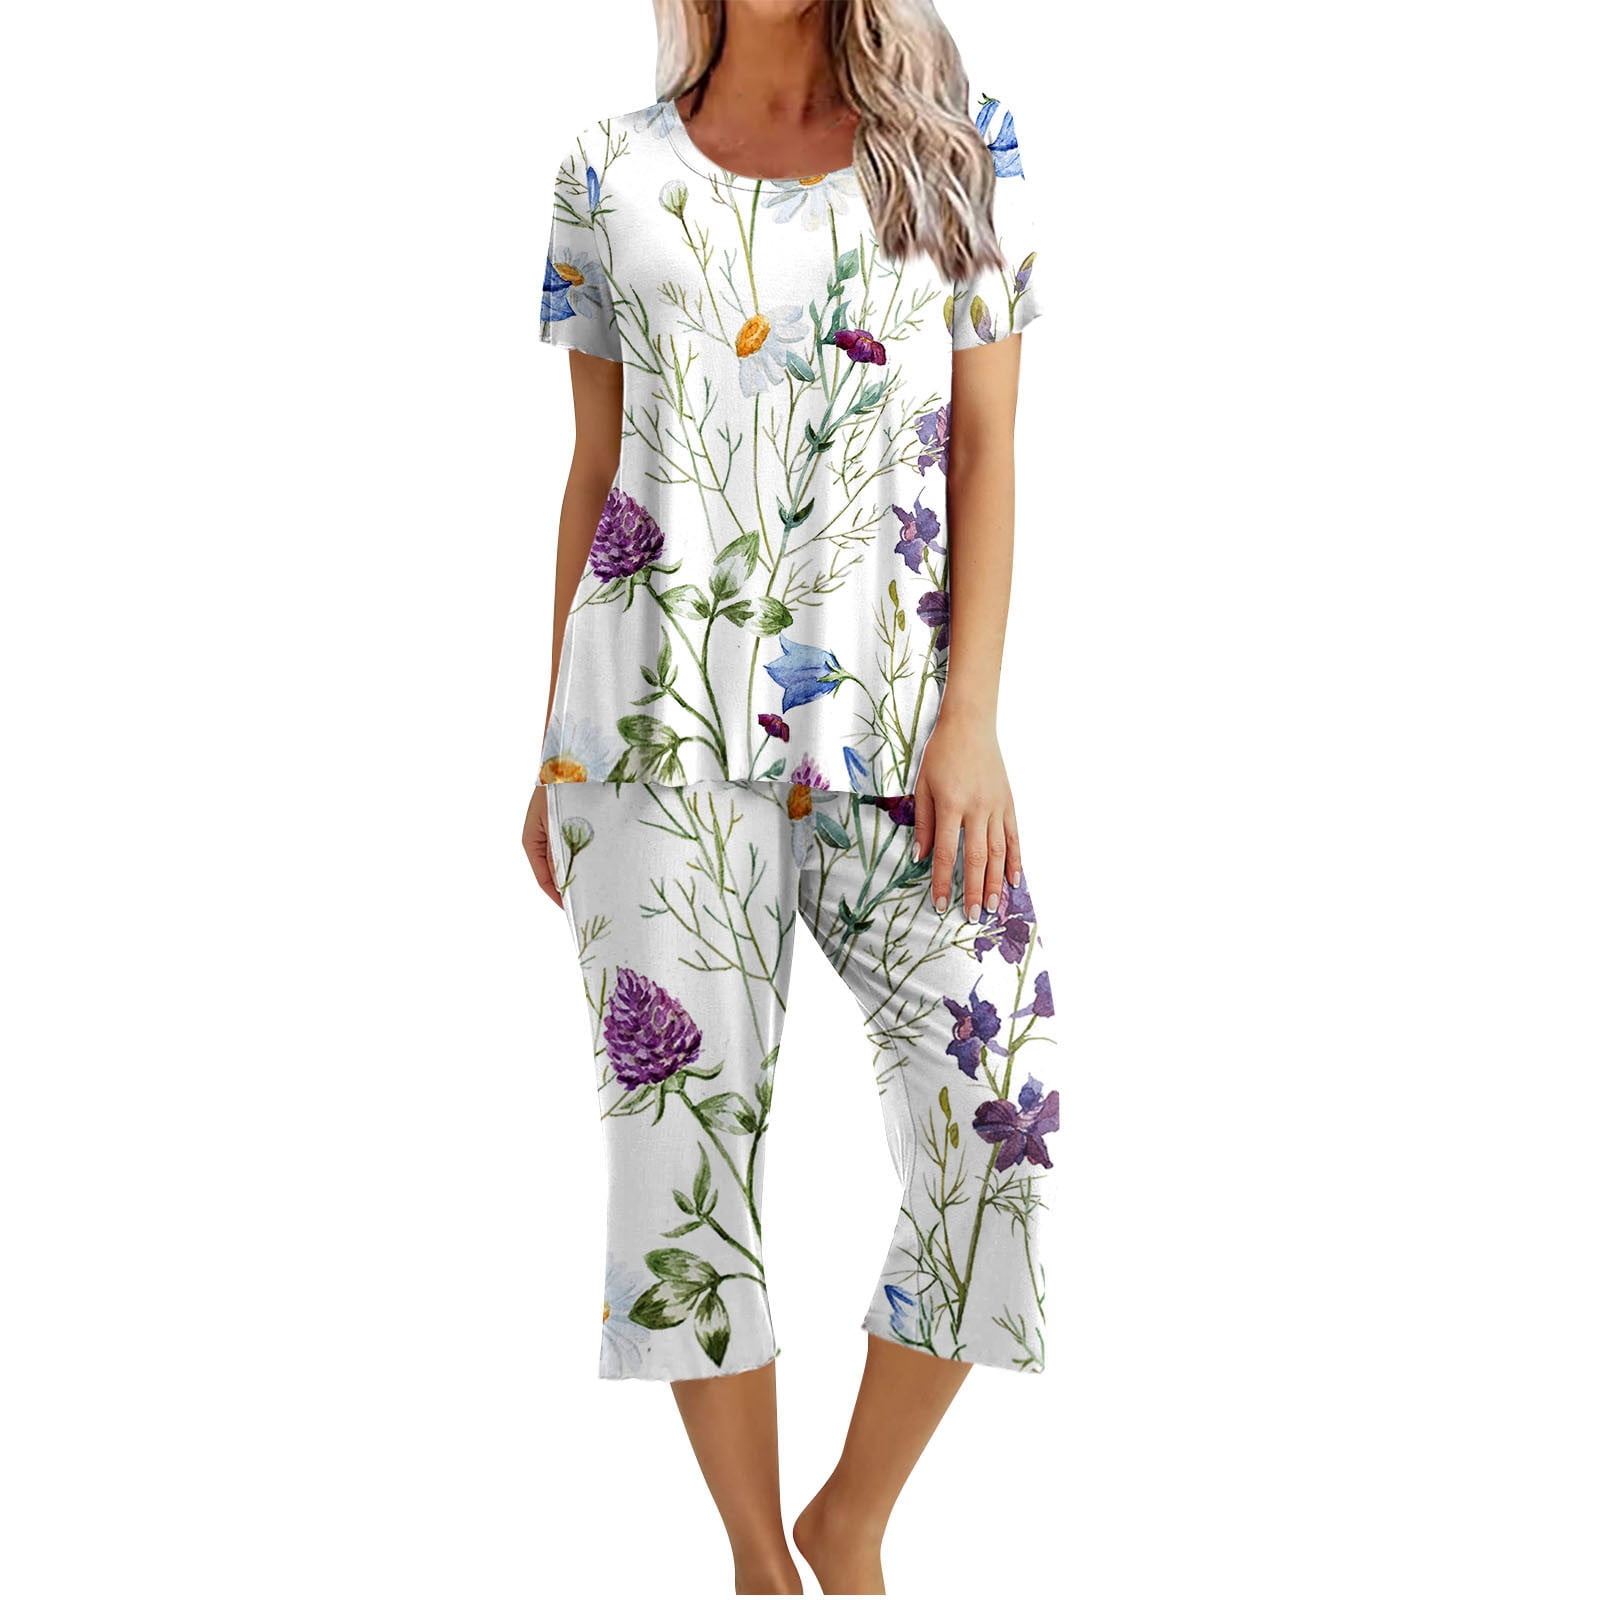 XFLWAM Women's Sleepwear Capri Pajama Sets Short Sleeve Two-Piece